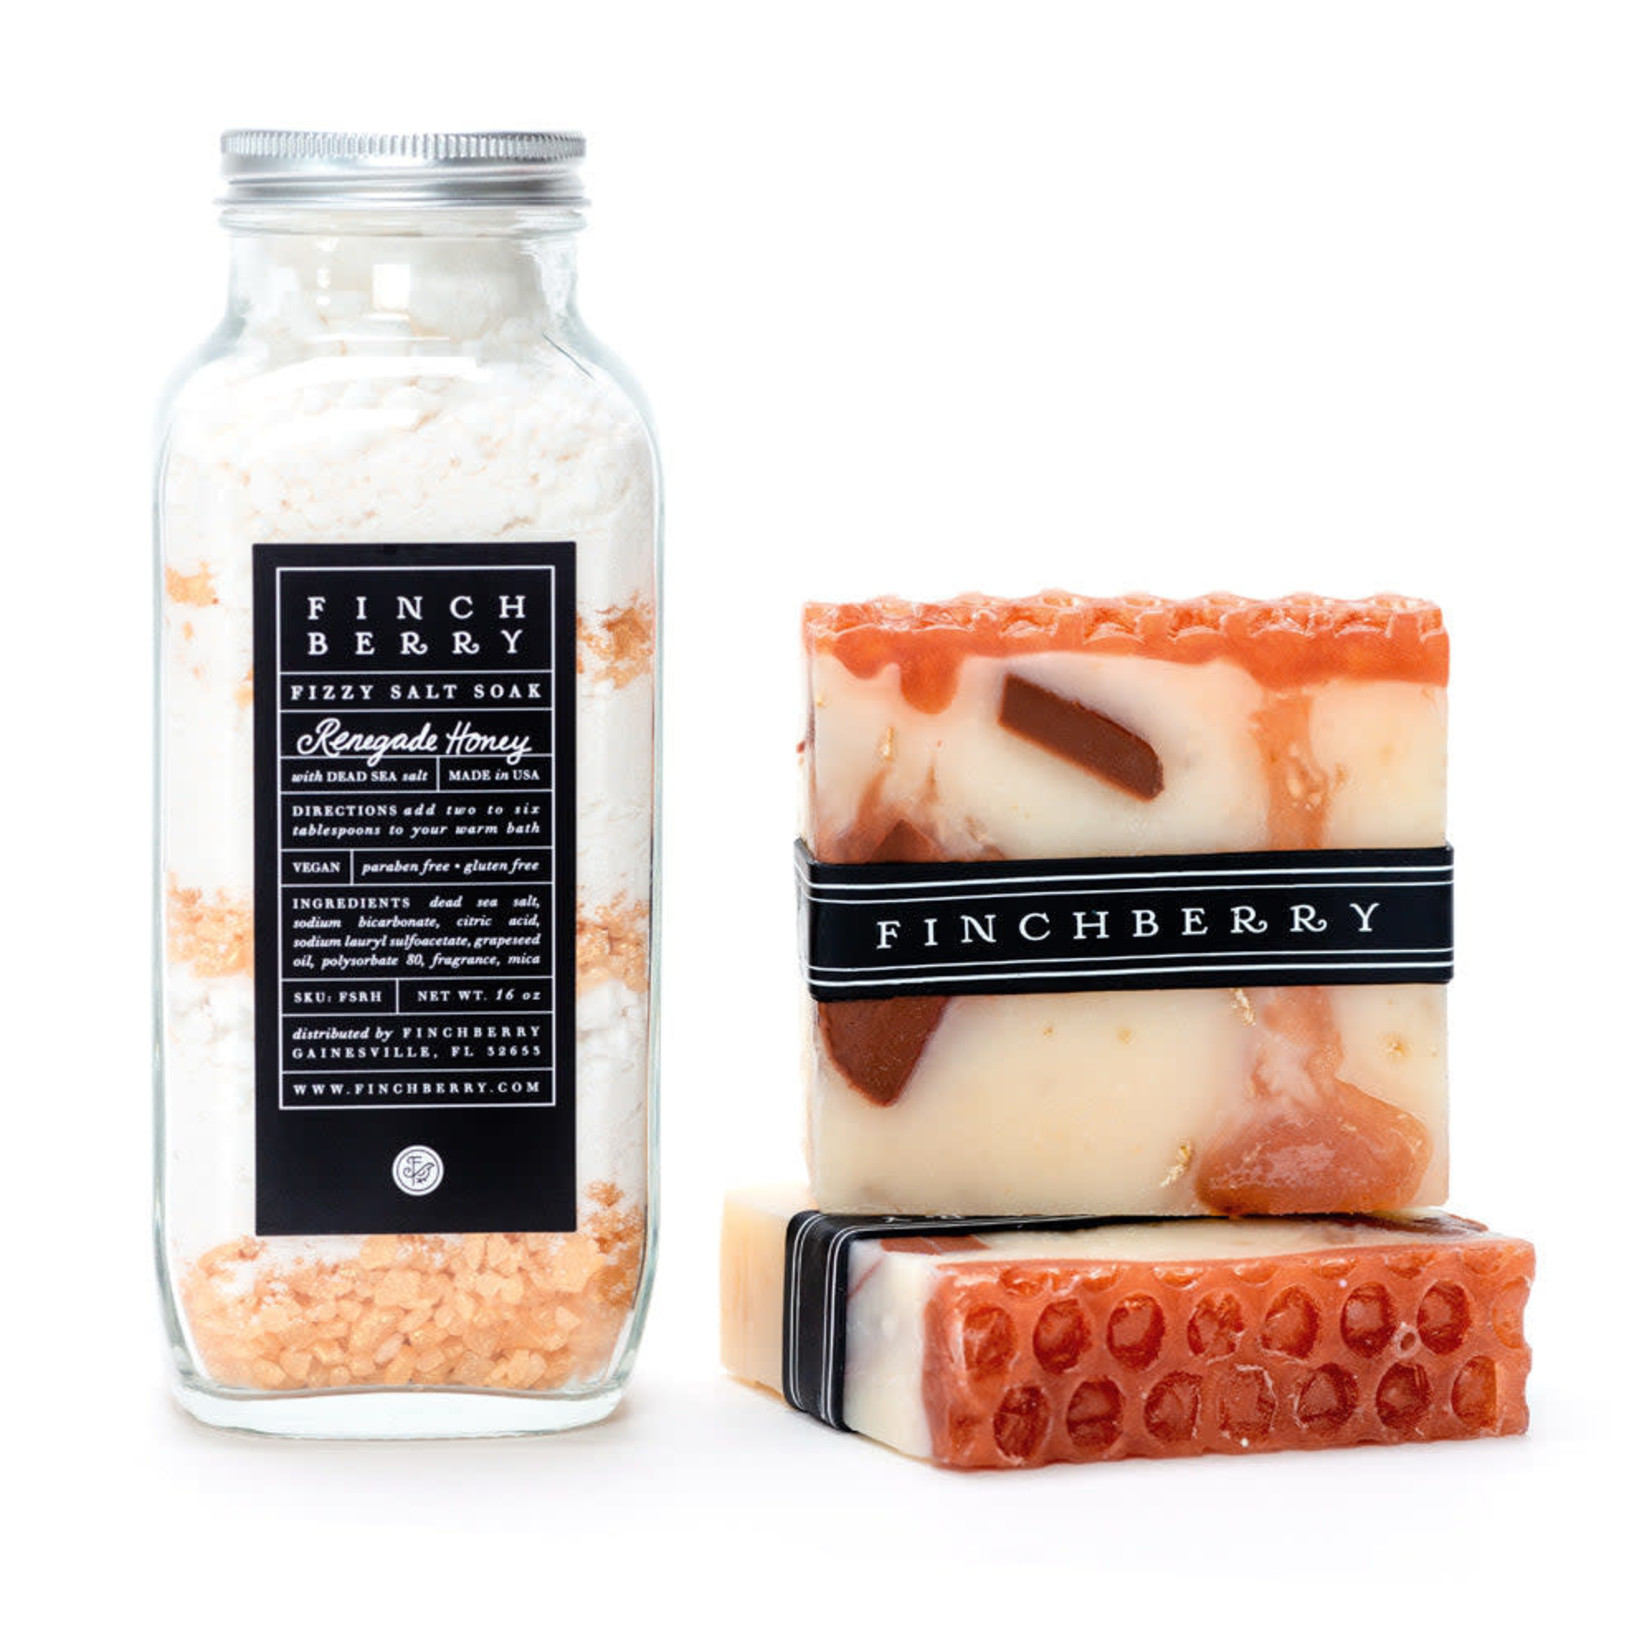 Finch Berry Renegade Honey - Handcrafted Vegan Soap